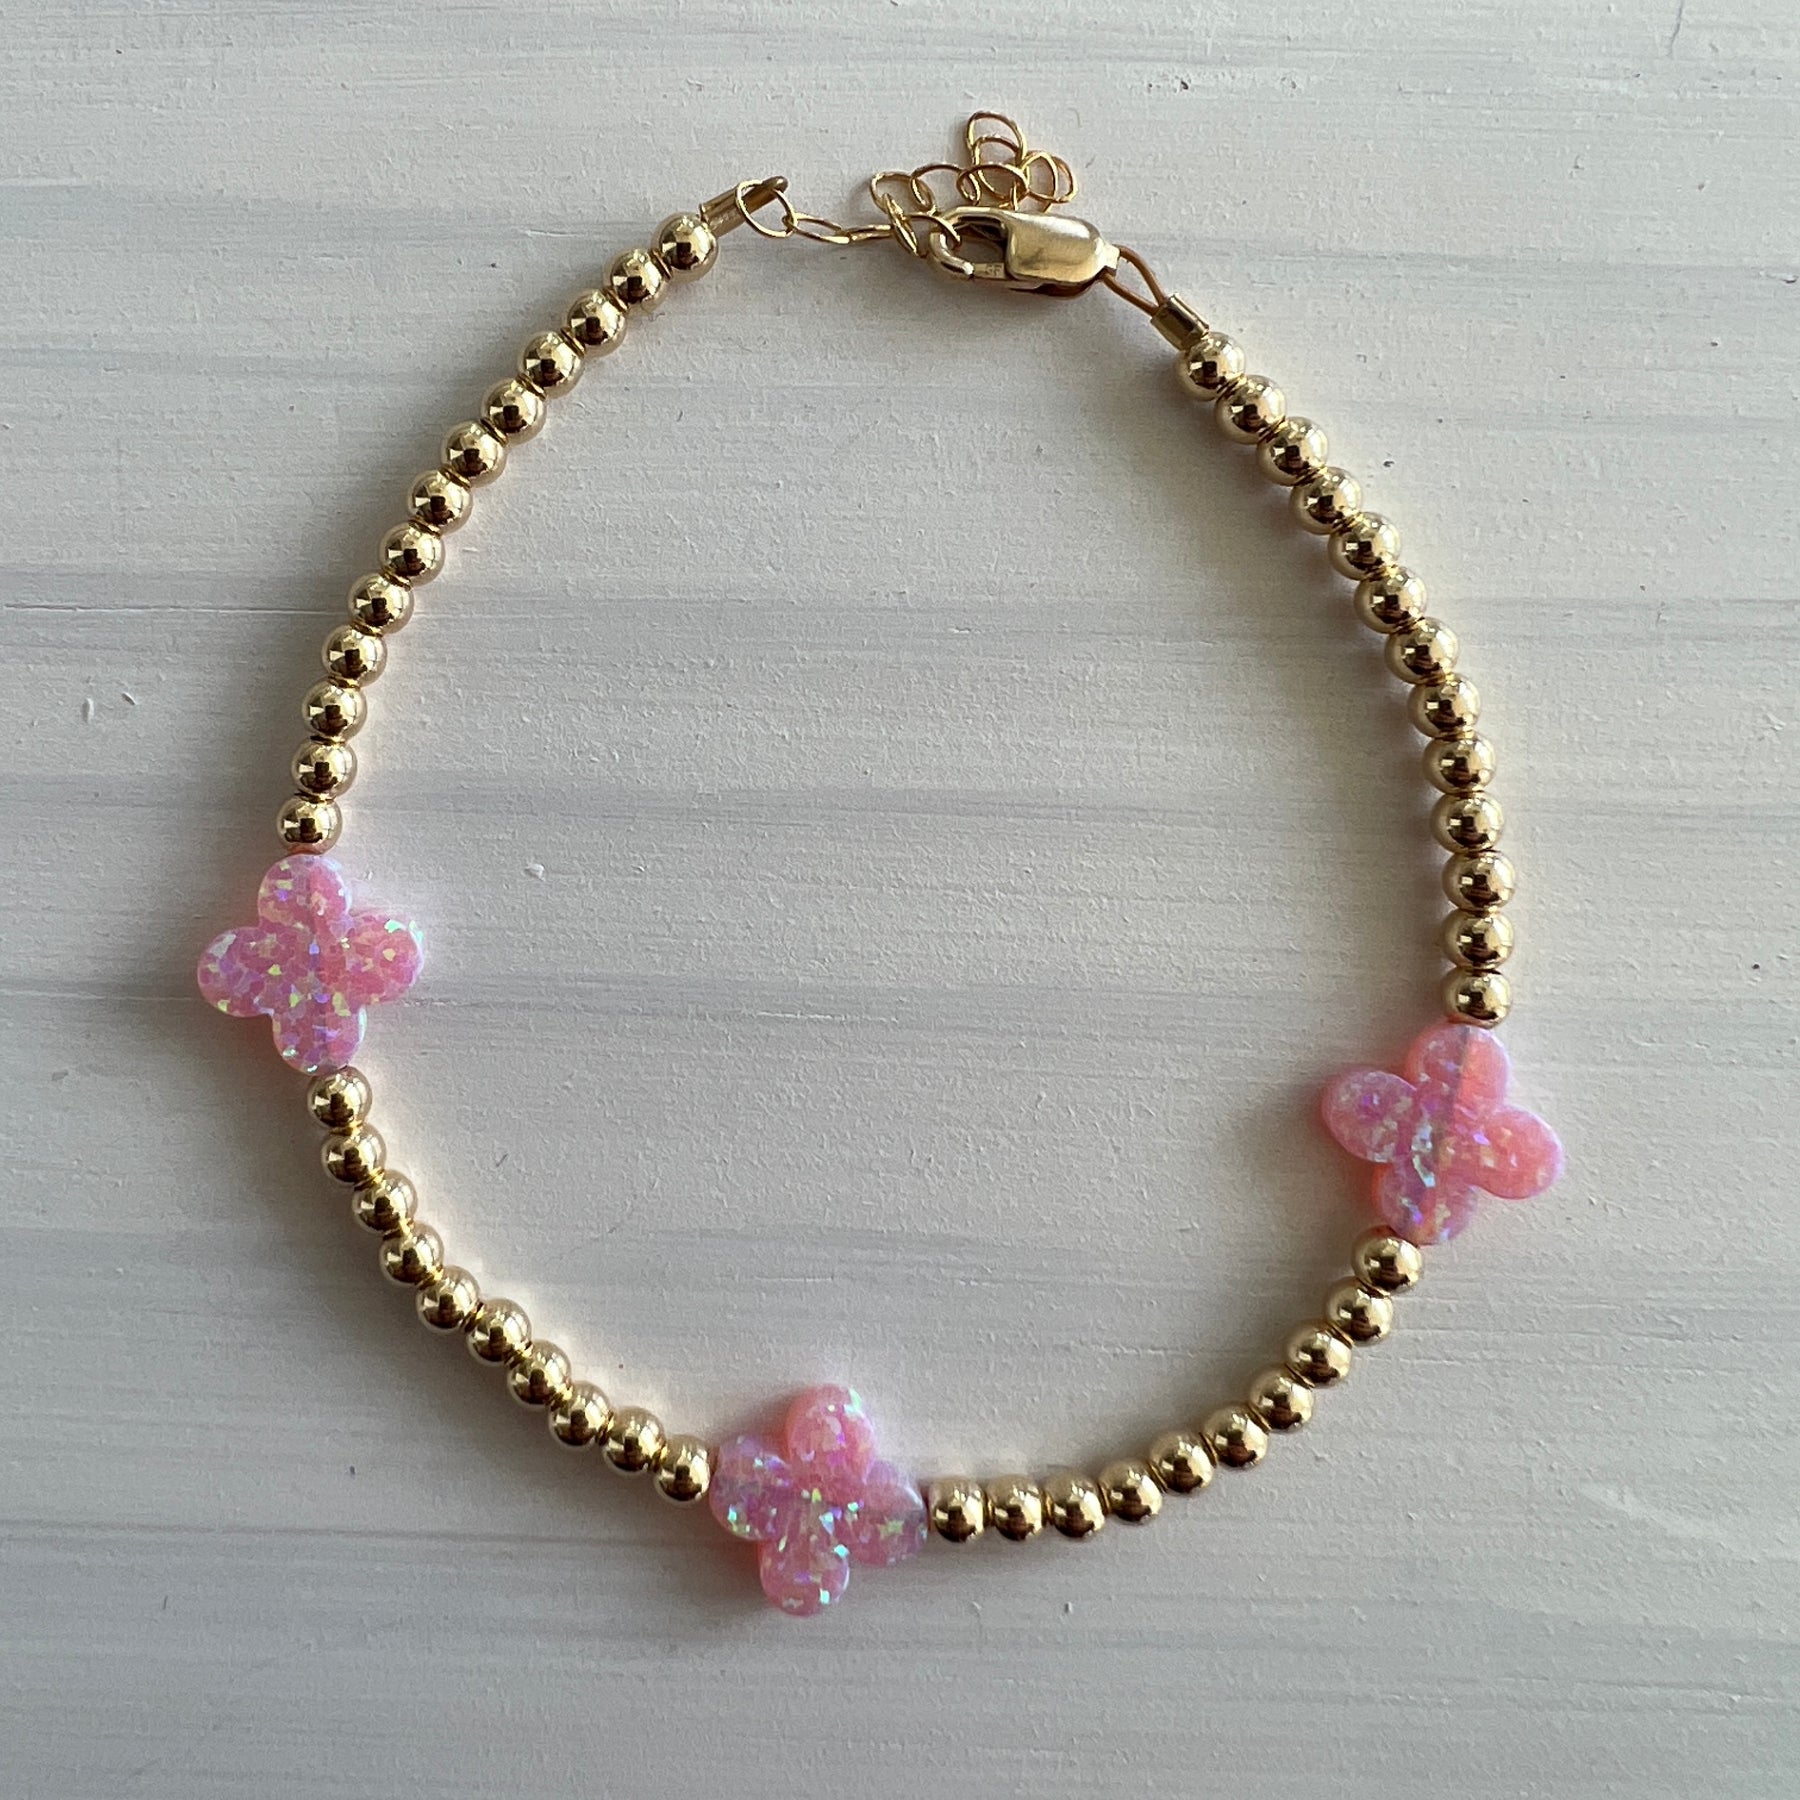 Cute Beads Bracelet with Eiffel Tower Charm - Strawberrycoco